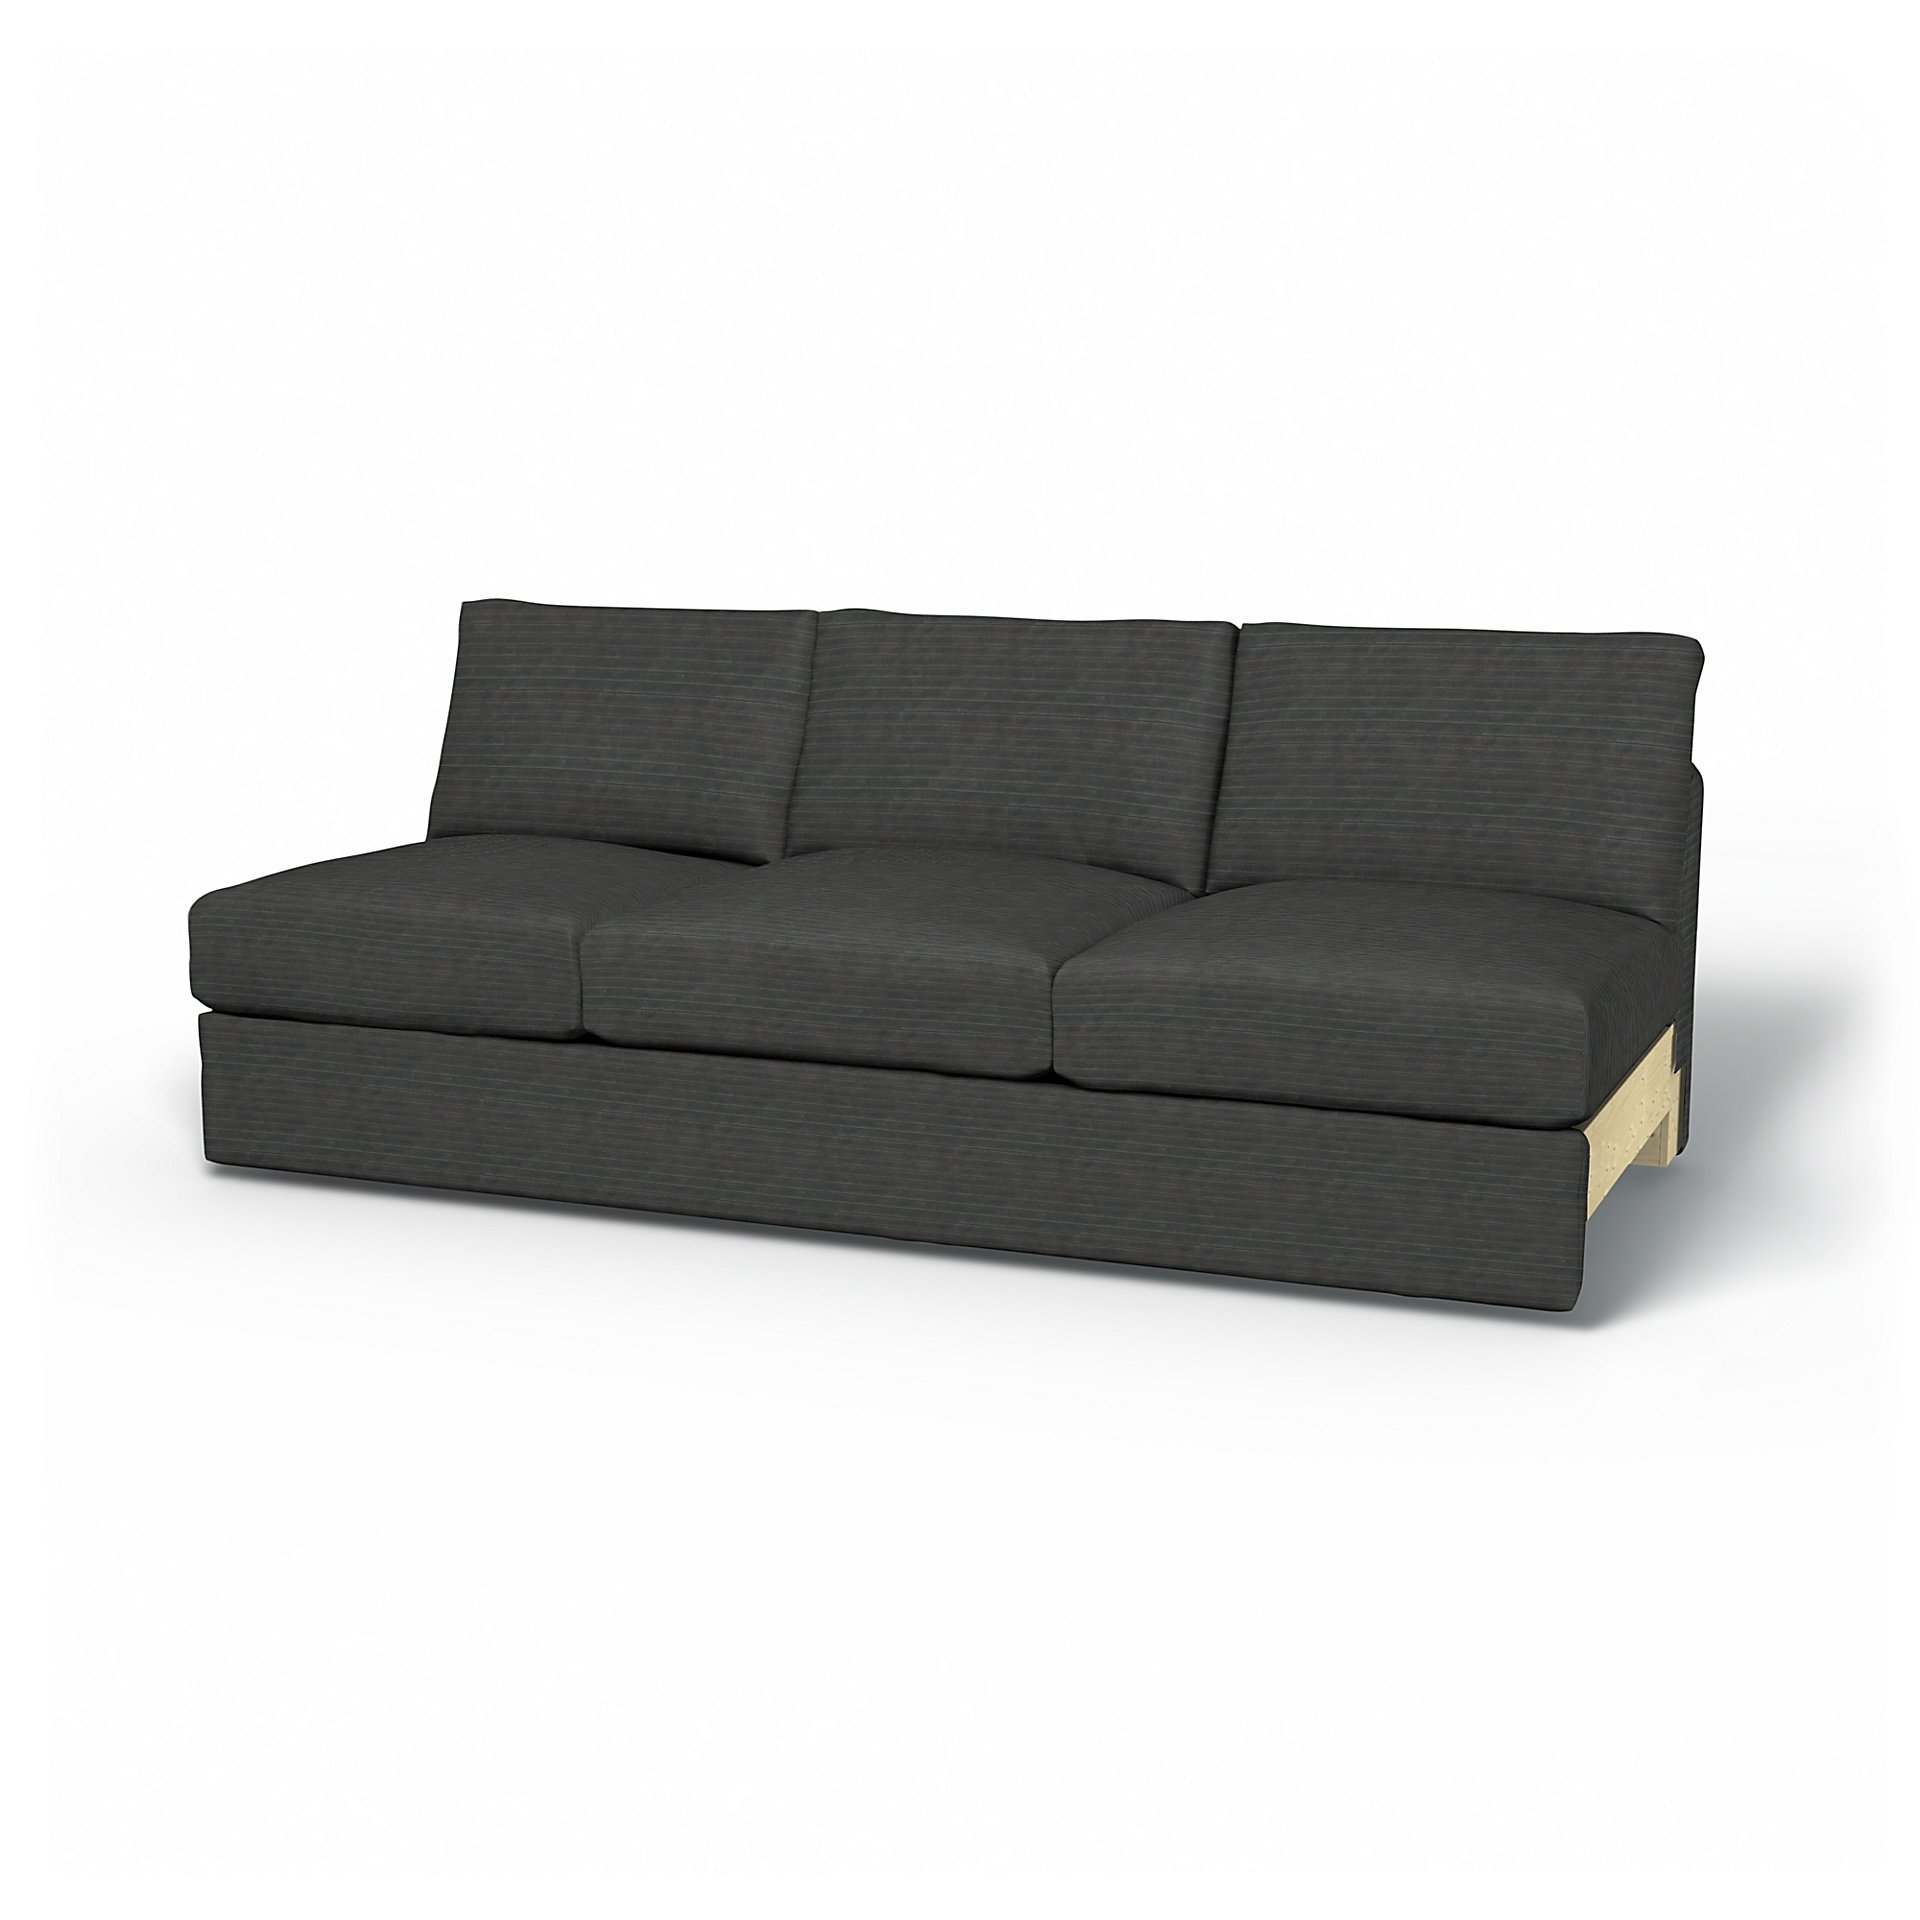 IKEA - Vimle 3 Seat Section Cover, Licorice, Corduroy - Bemz